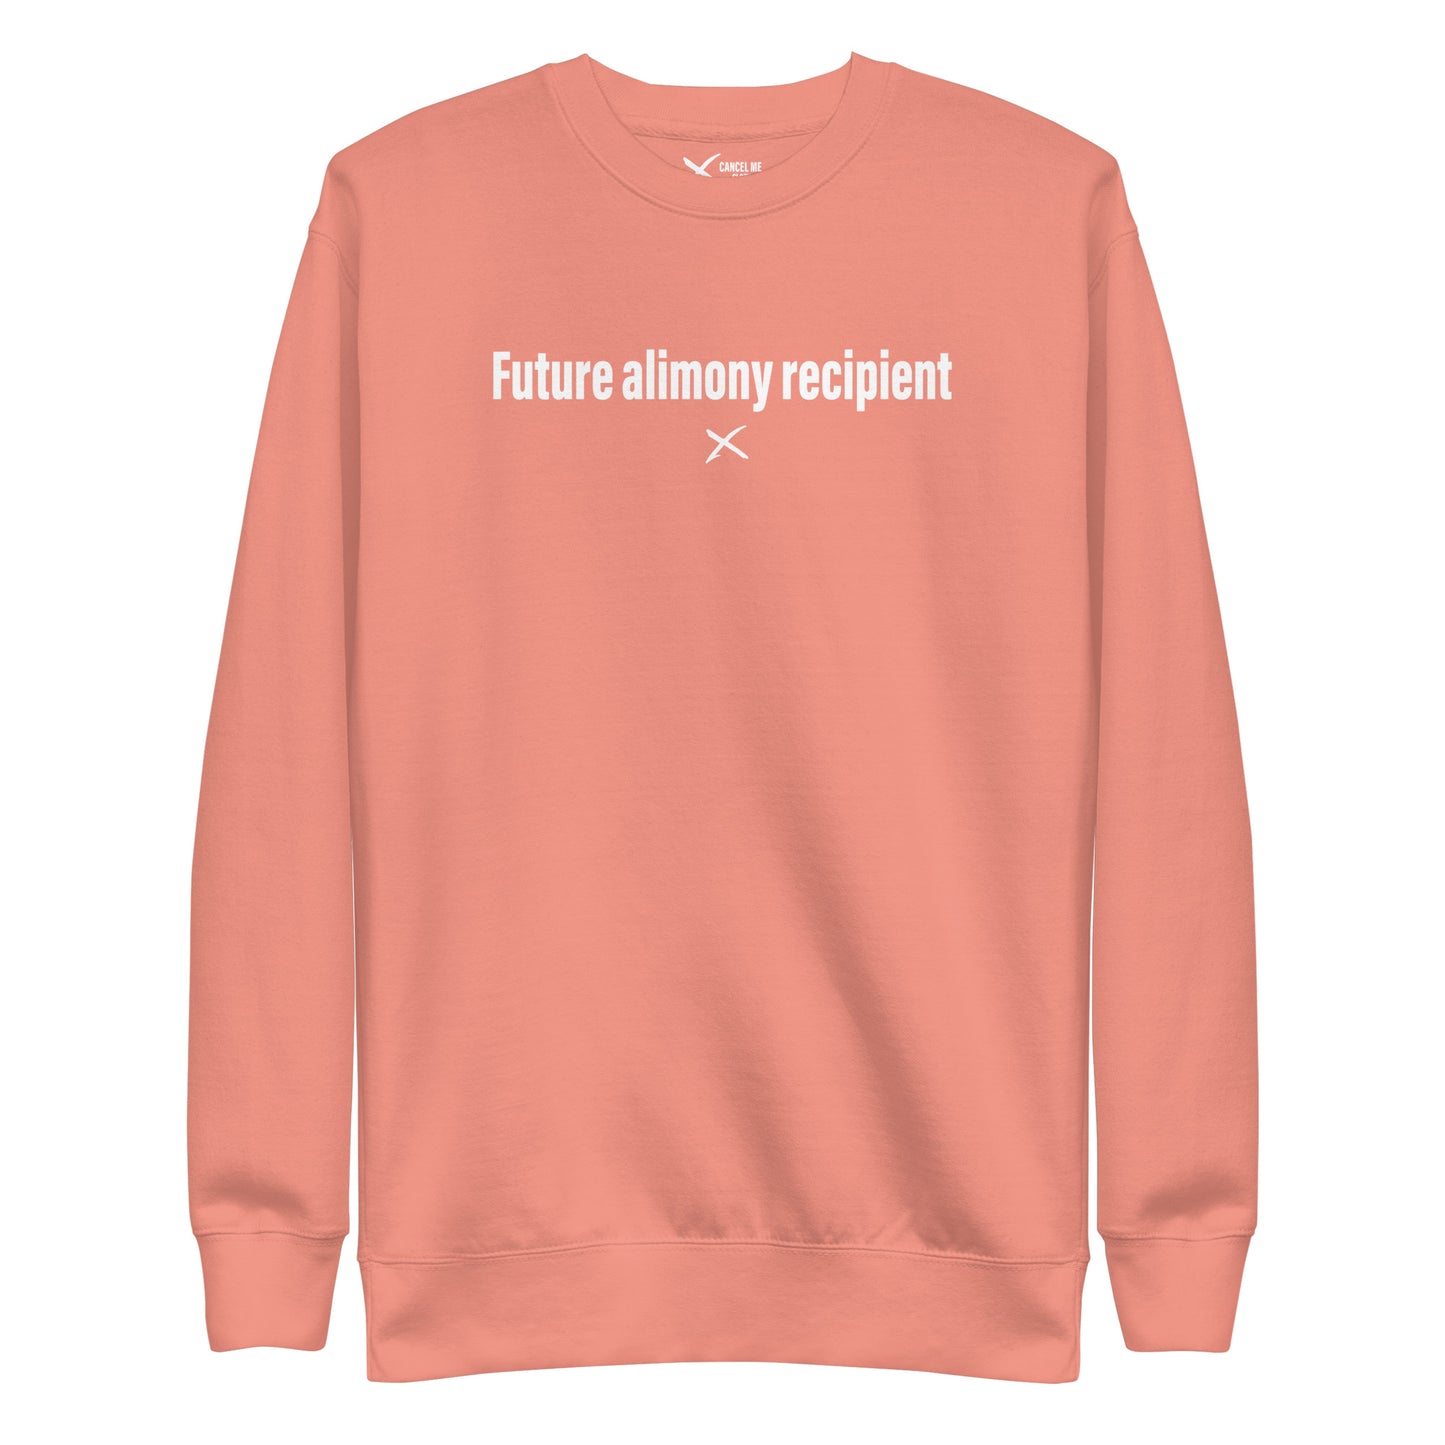 Future alimony recipient - Sweatshirt